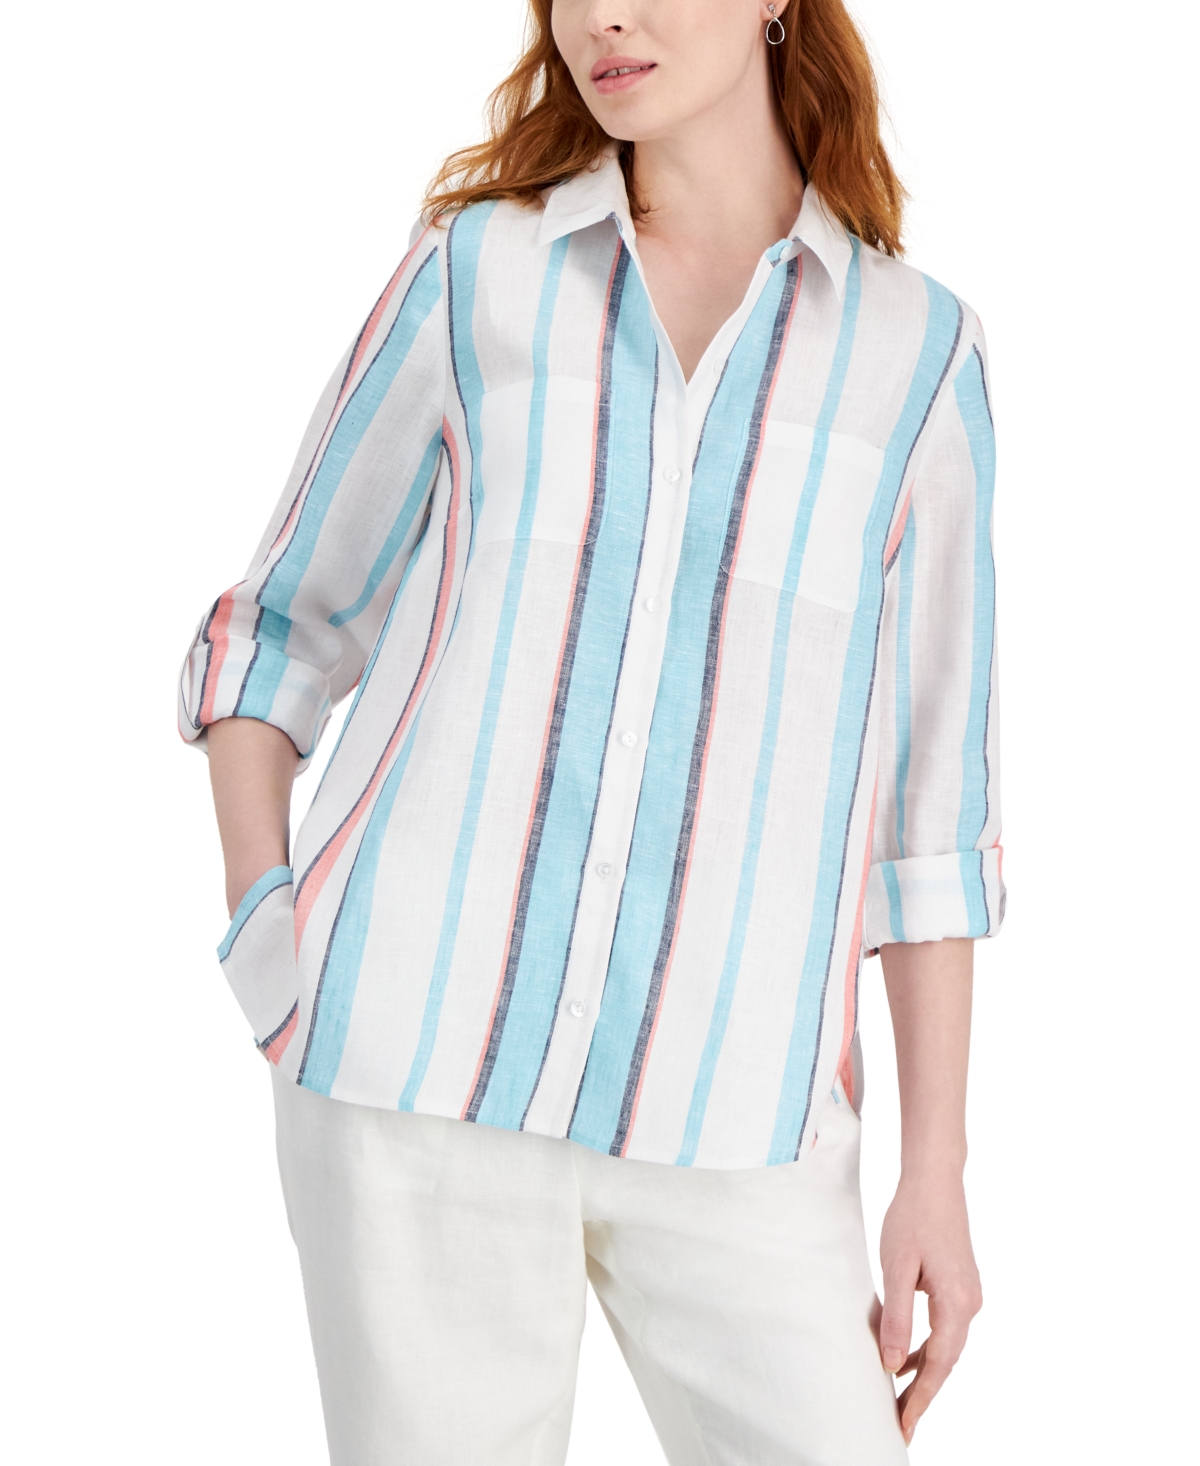 Women's 100% Linen Hampton Stripe Tab-Sleeve Top, Created for Macy's - Bright White Combo